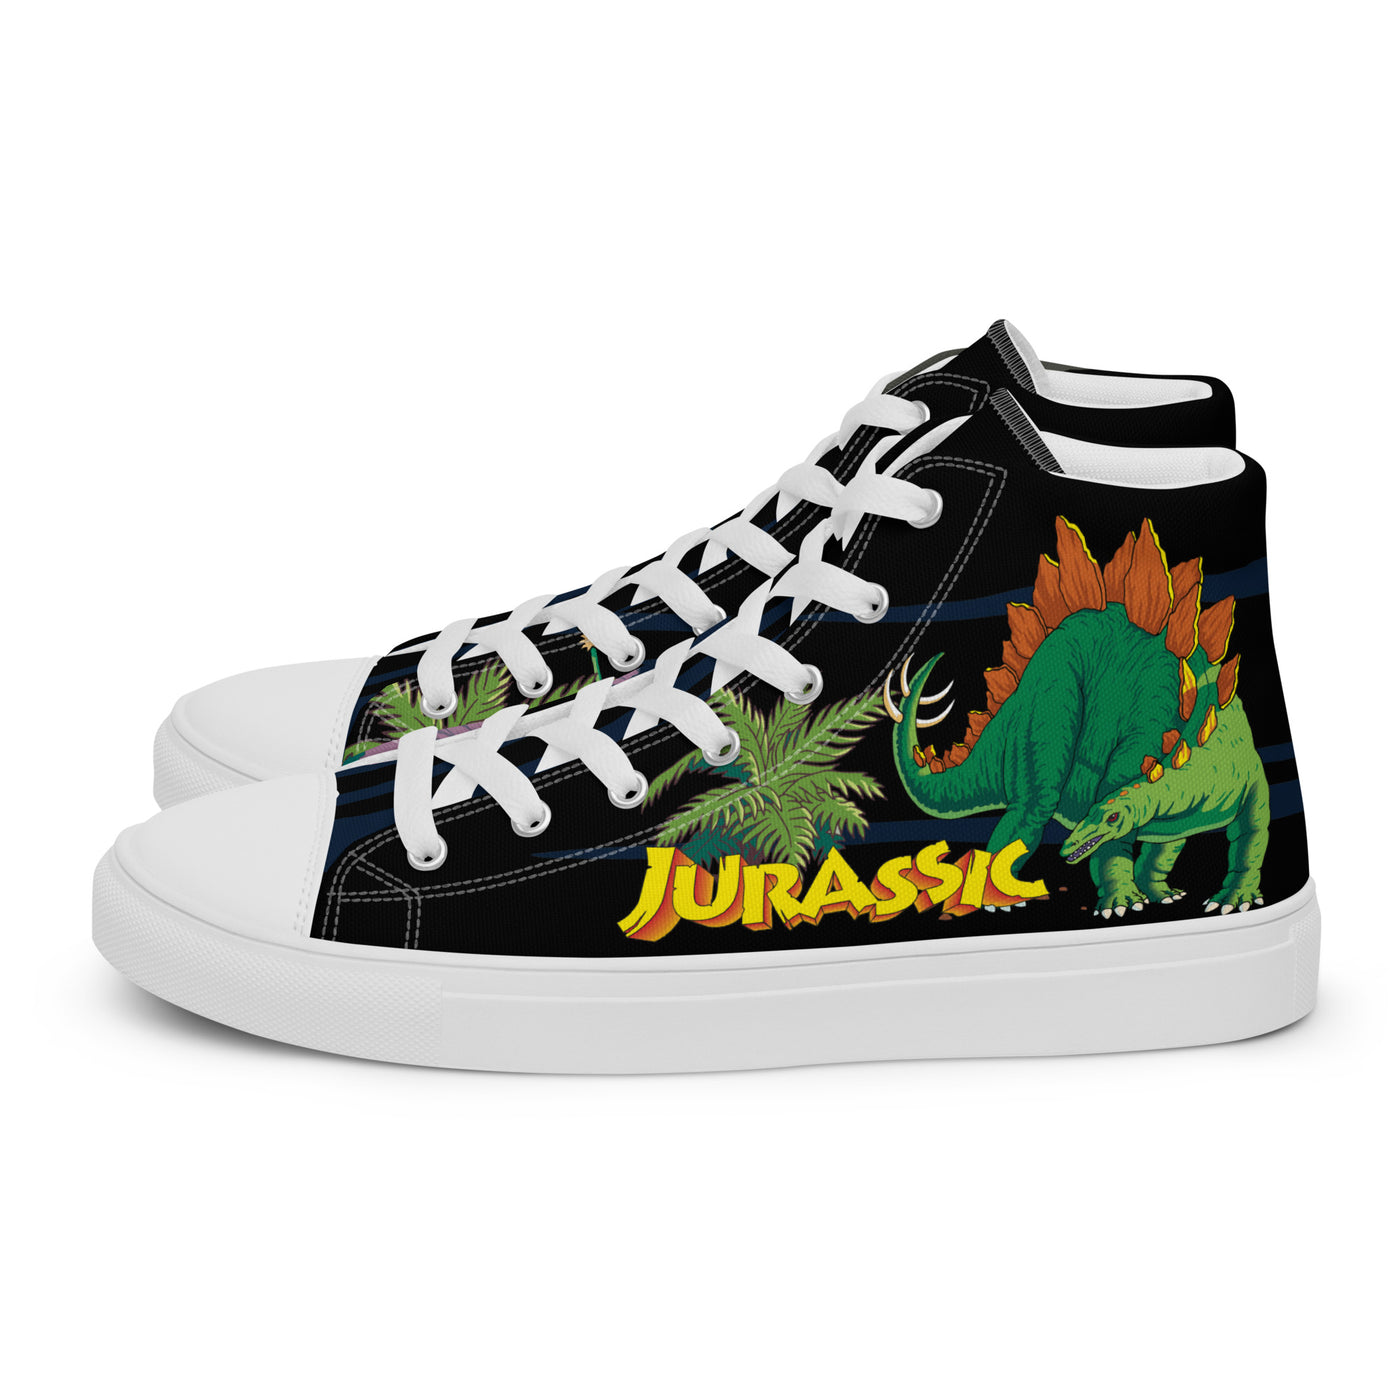 Dinosaurs - Men's High Top Canvas Shoes